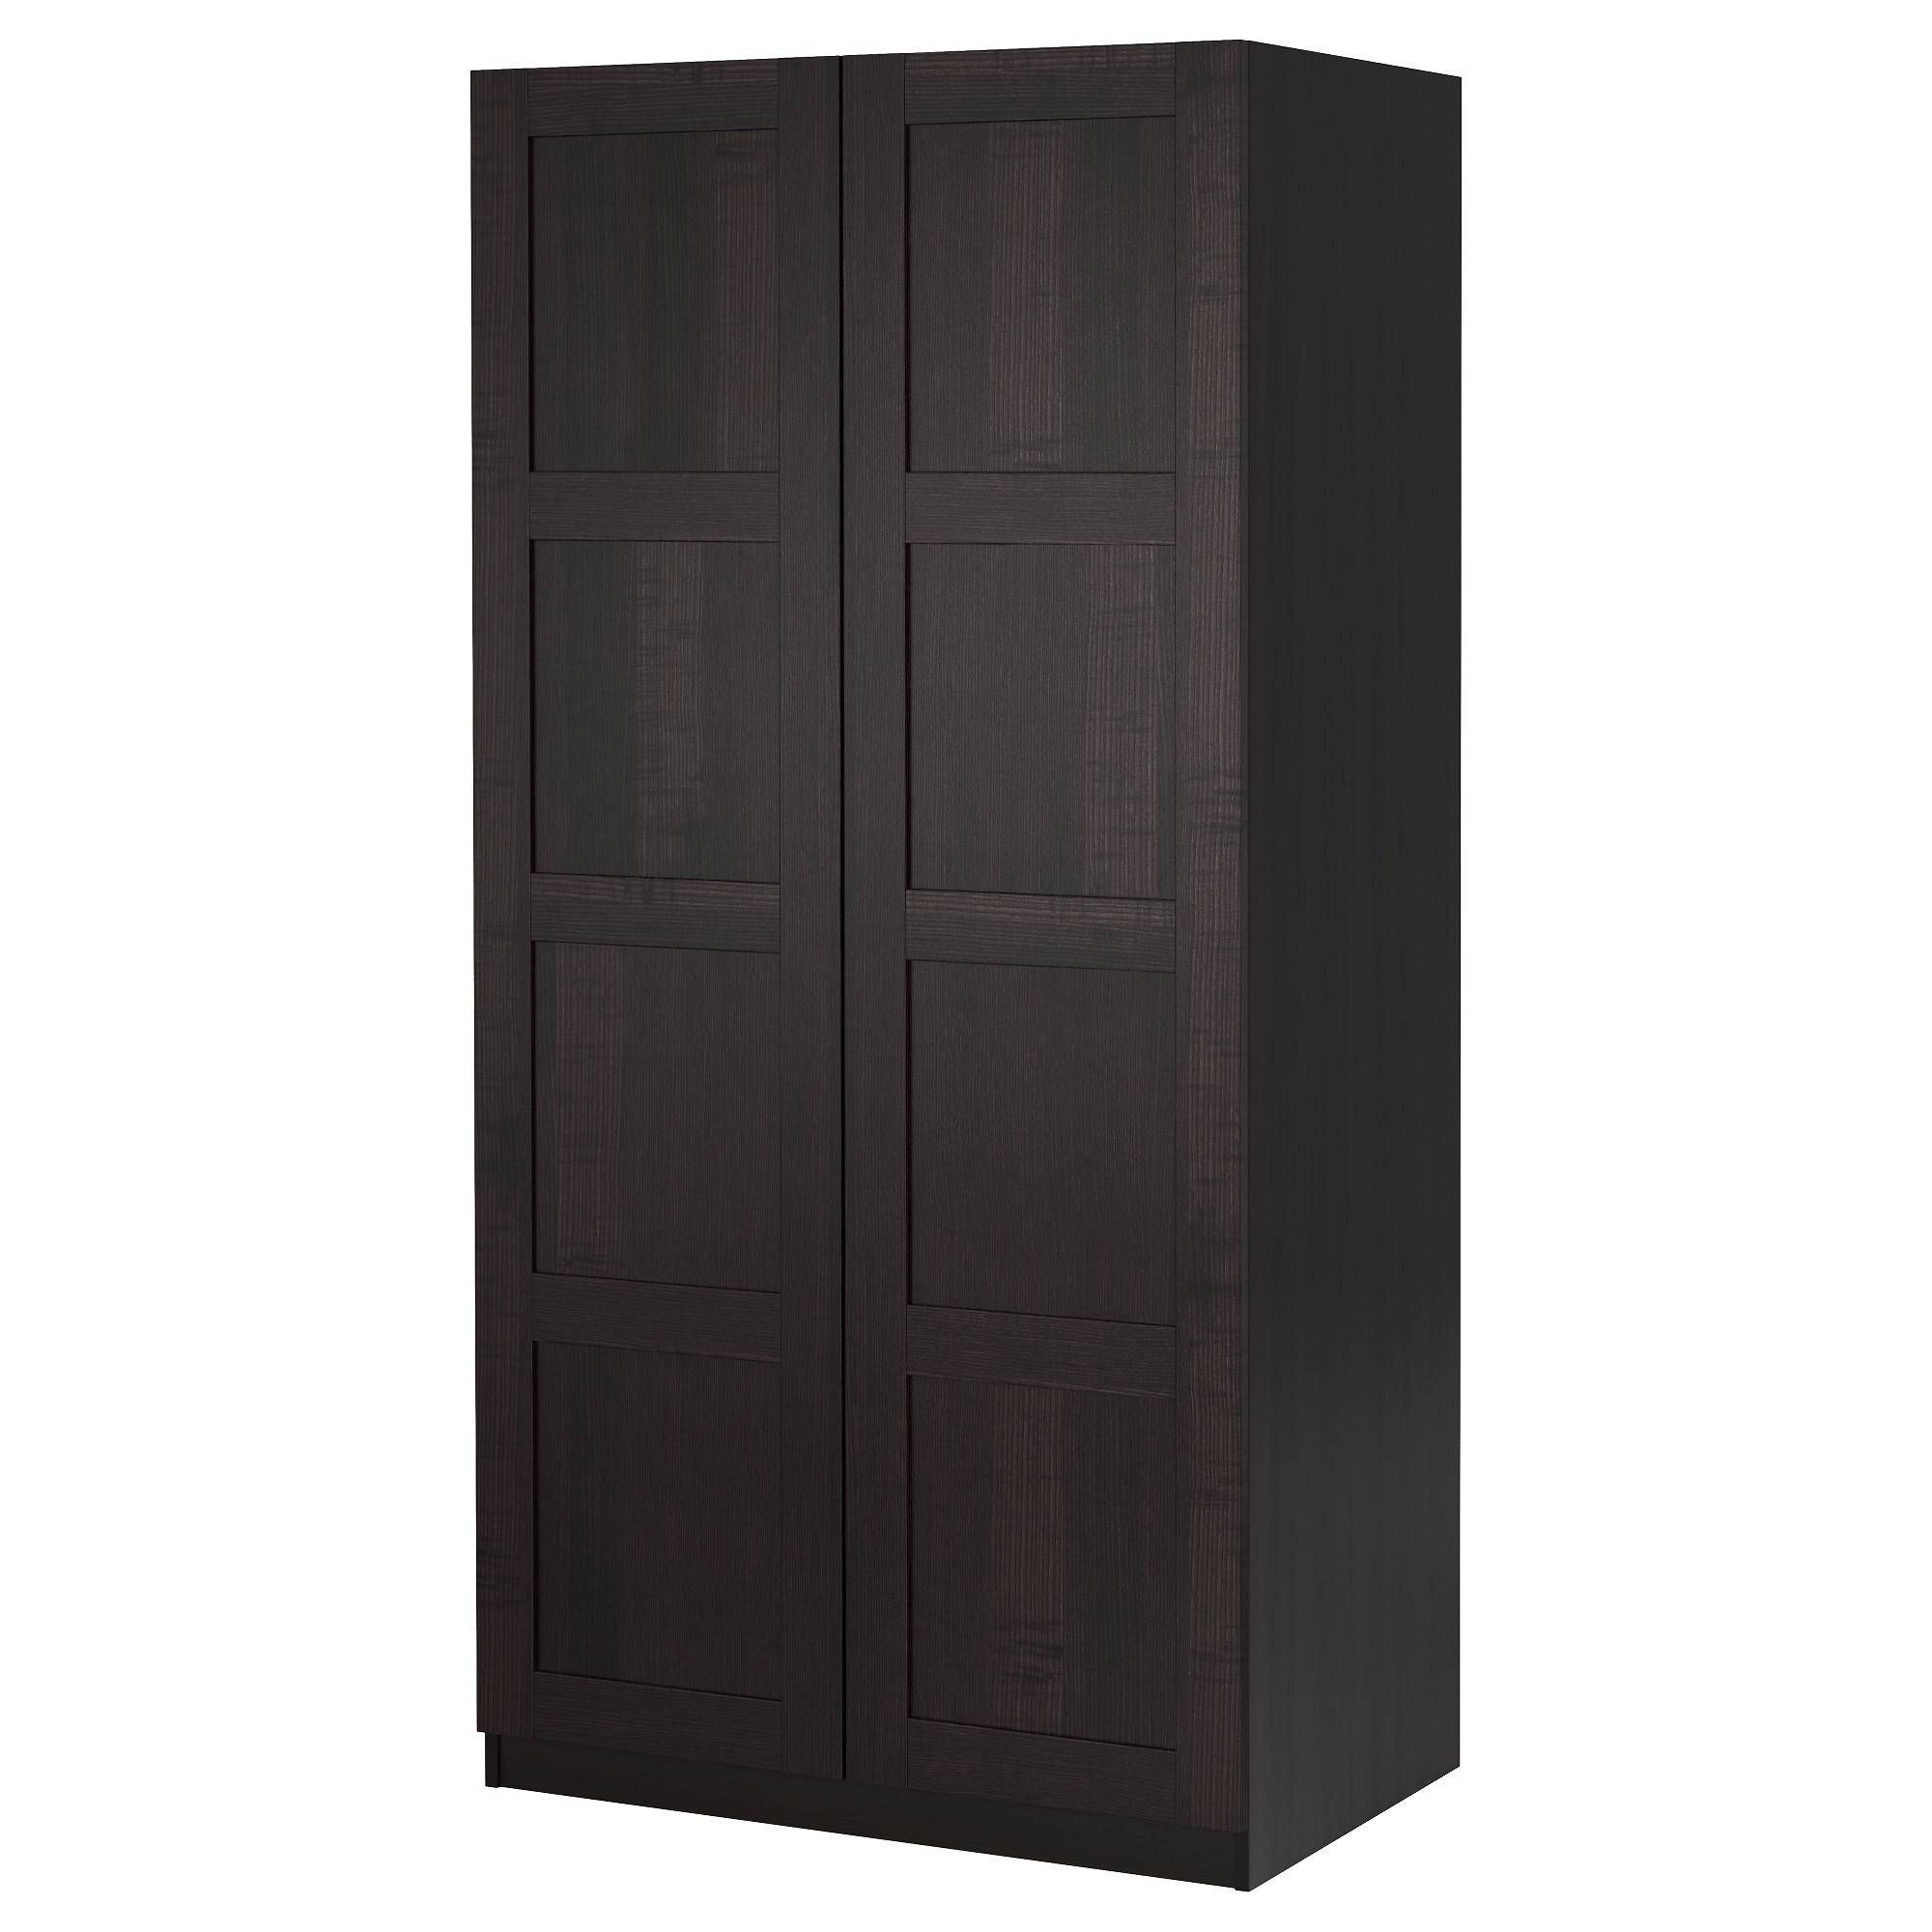 Pax Wardrobe Black Brown/bergsbo Black Brown 100x60x201 Cm – Ikea With Regard To Black Wardrobes (View 8 of 15)